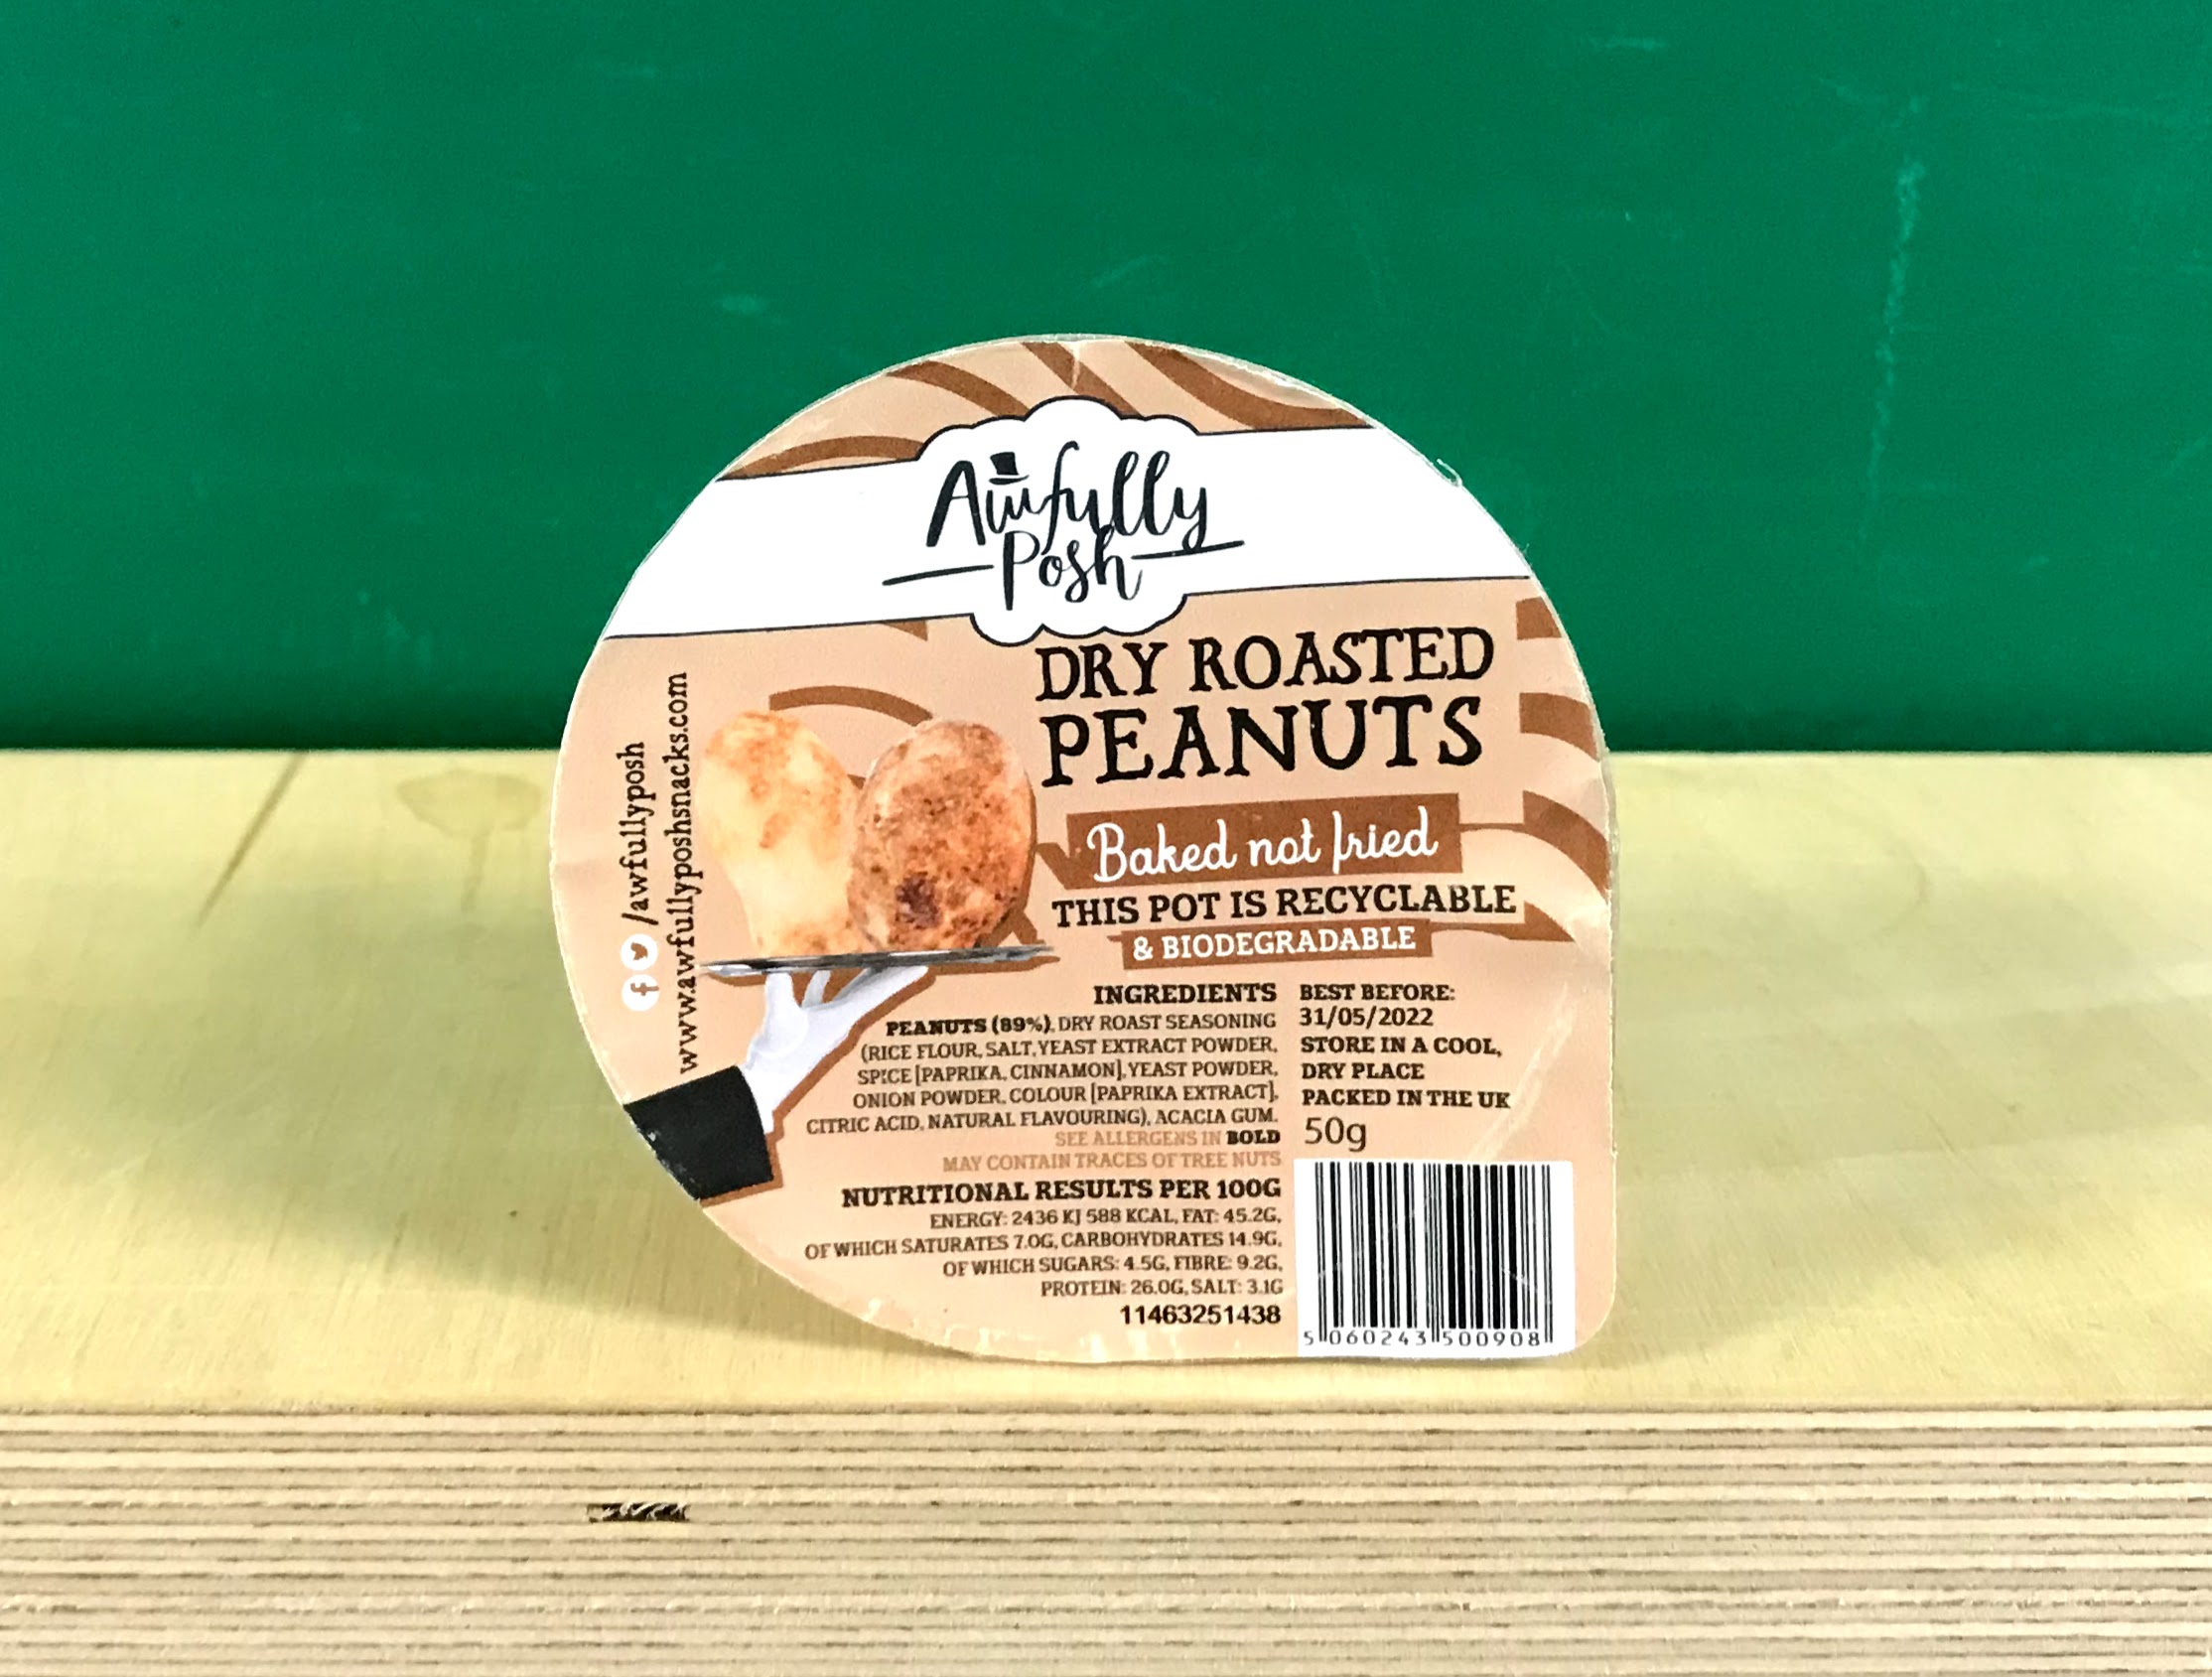 Awfully Posh Dry Roasted Peanuts